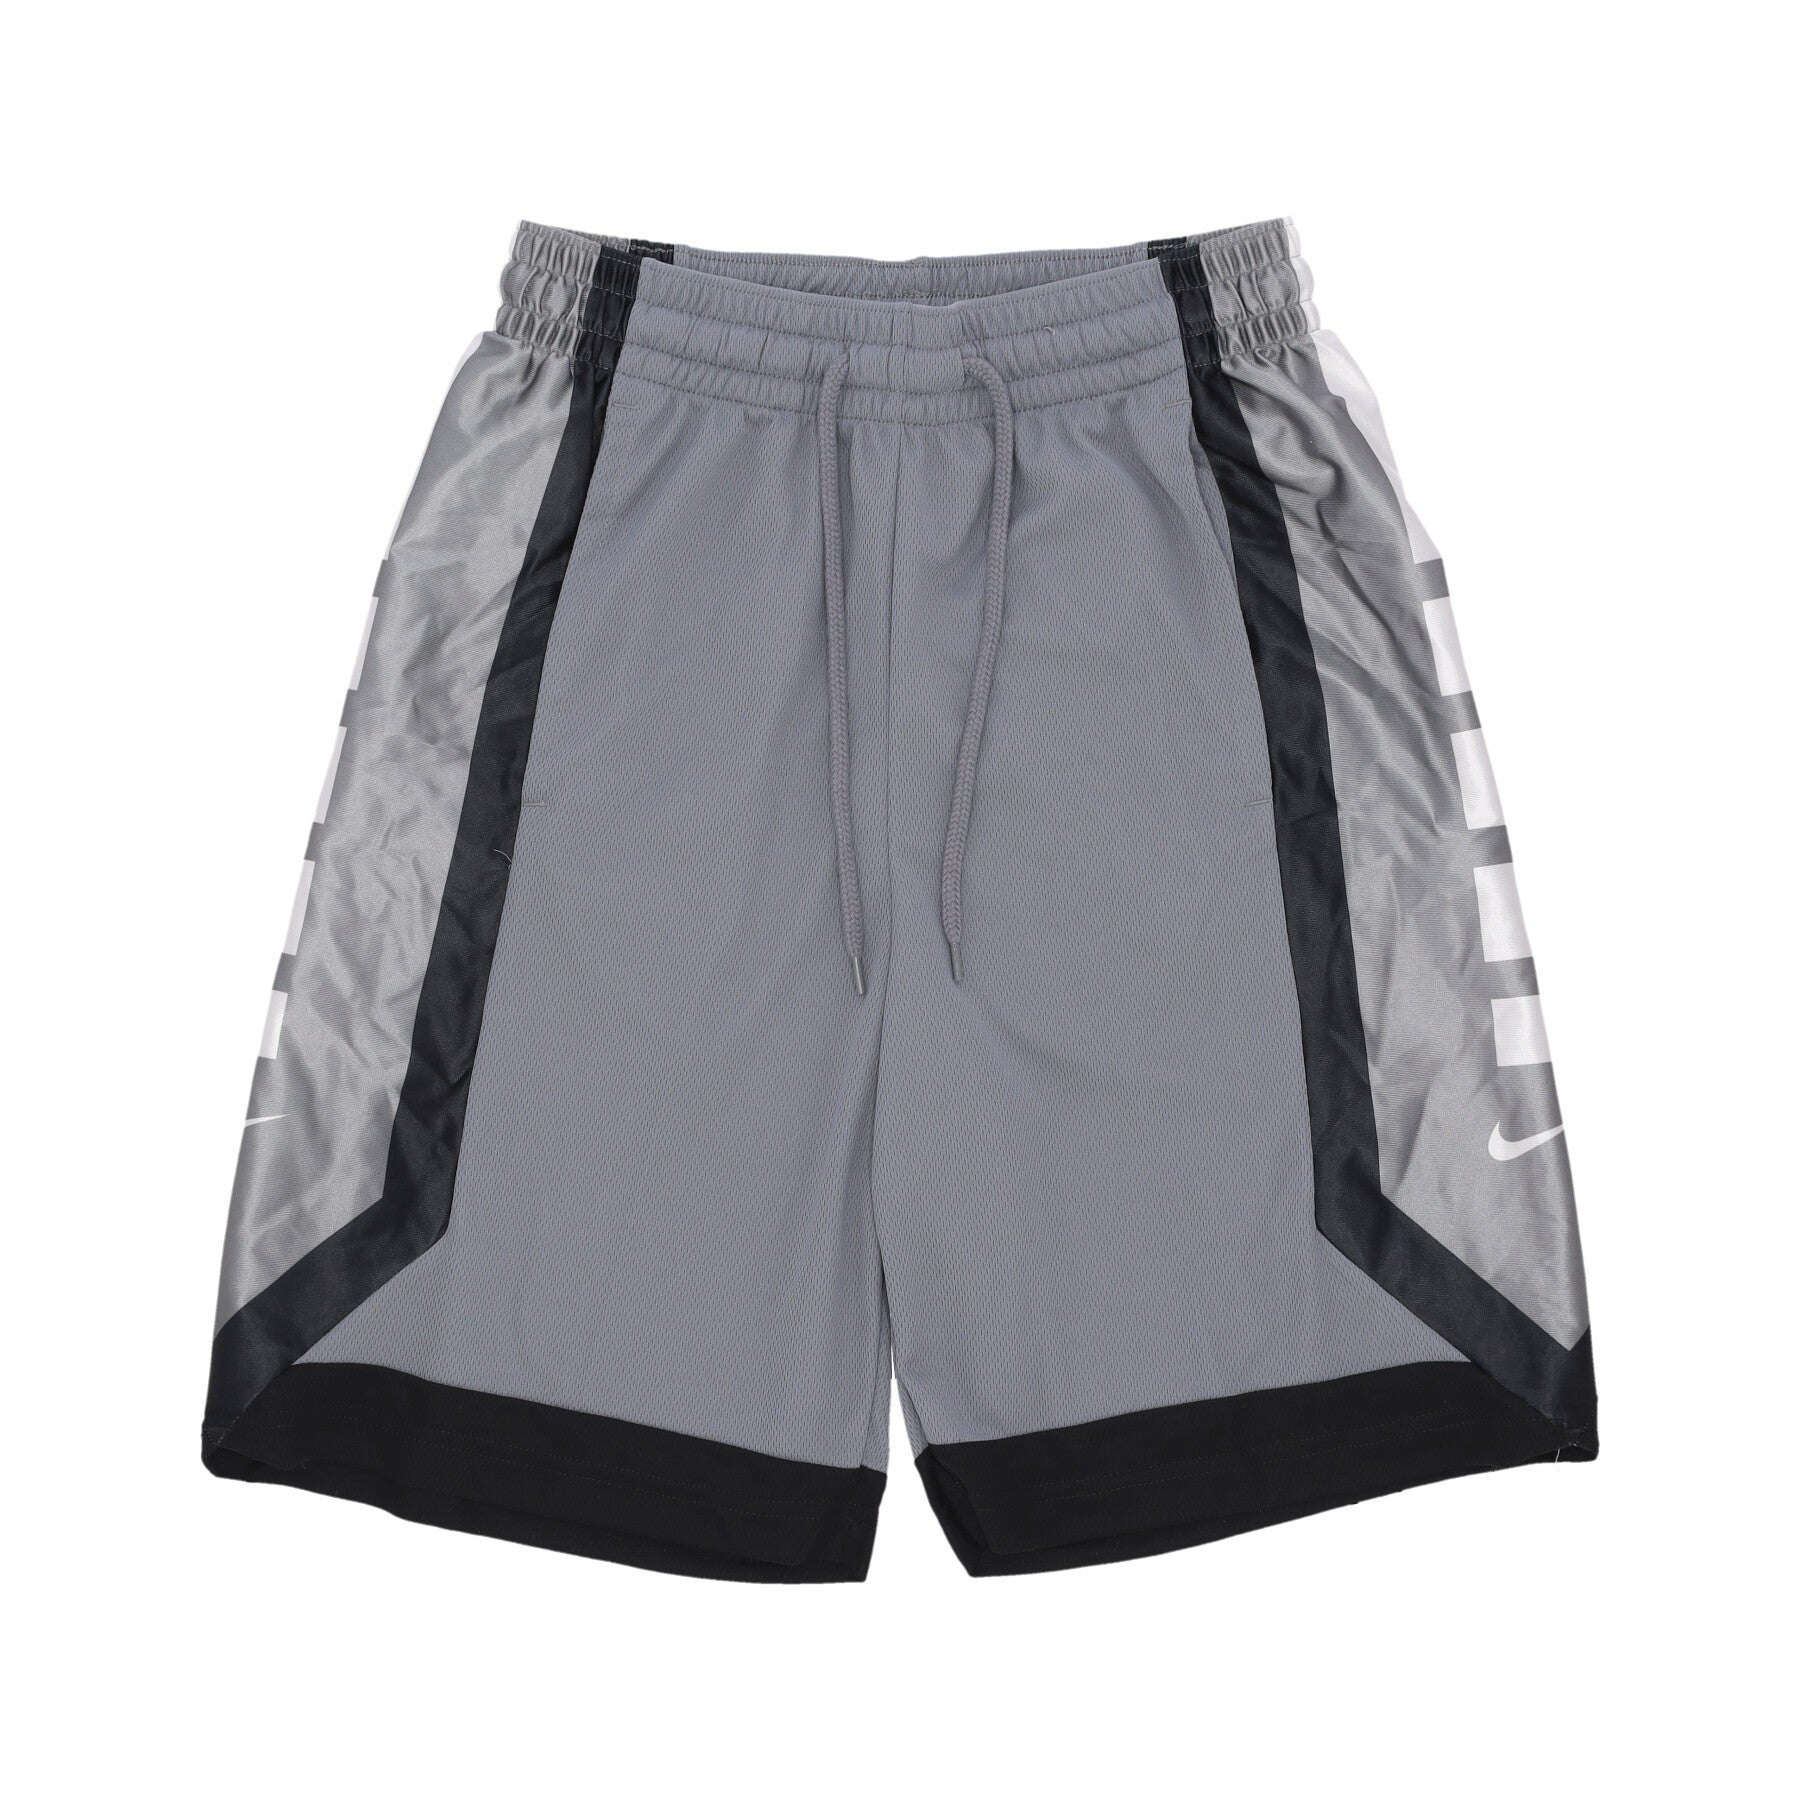 Men's Basketball Shorts Dri-fit Elite Basketball Shorts Cool Grey/black/white